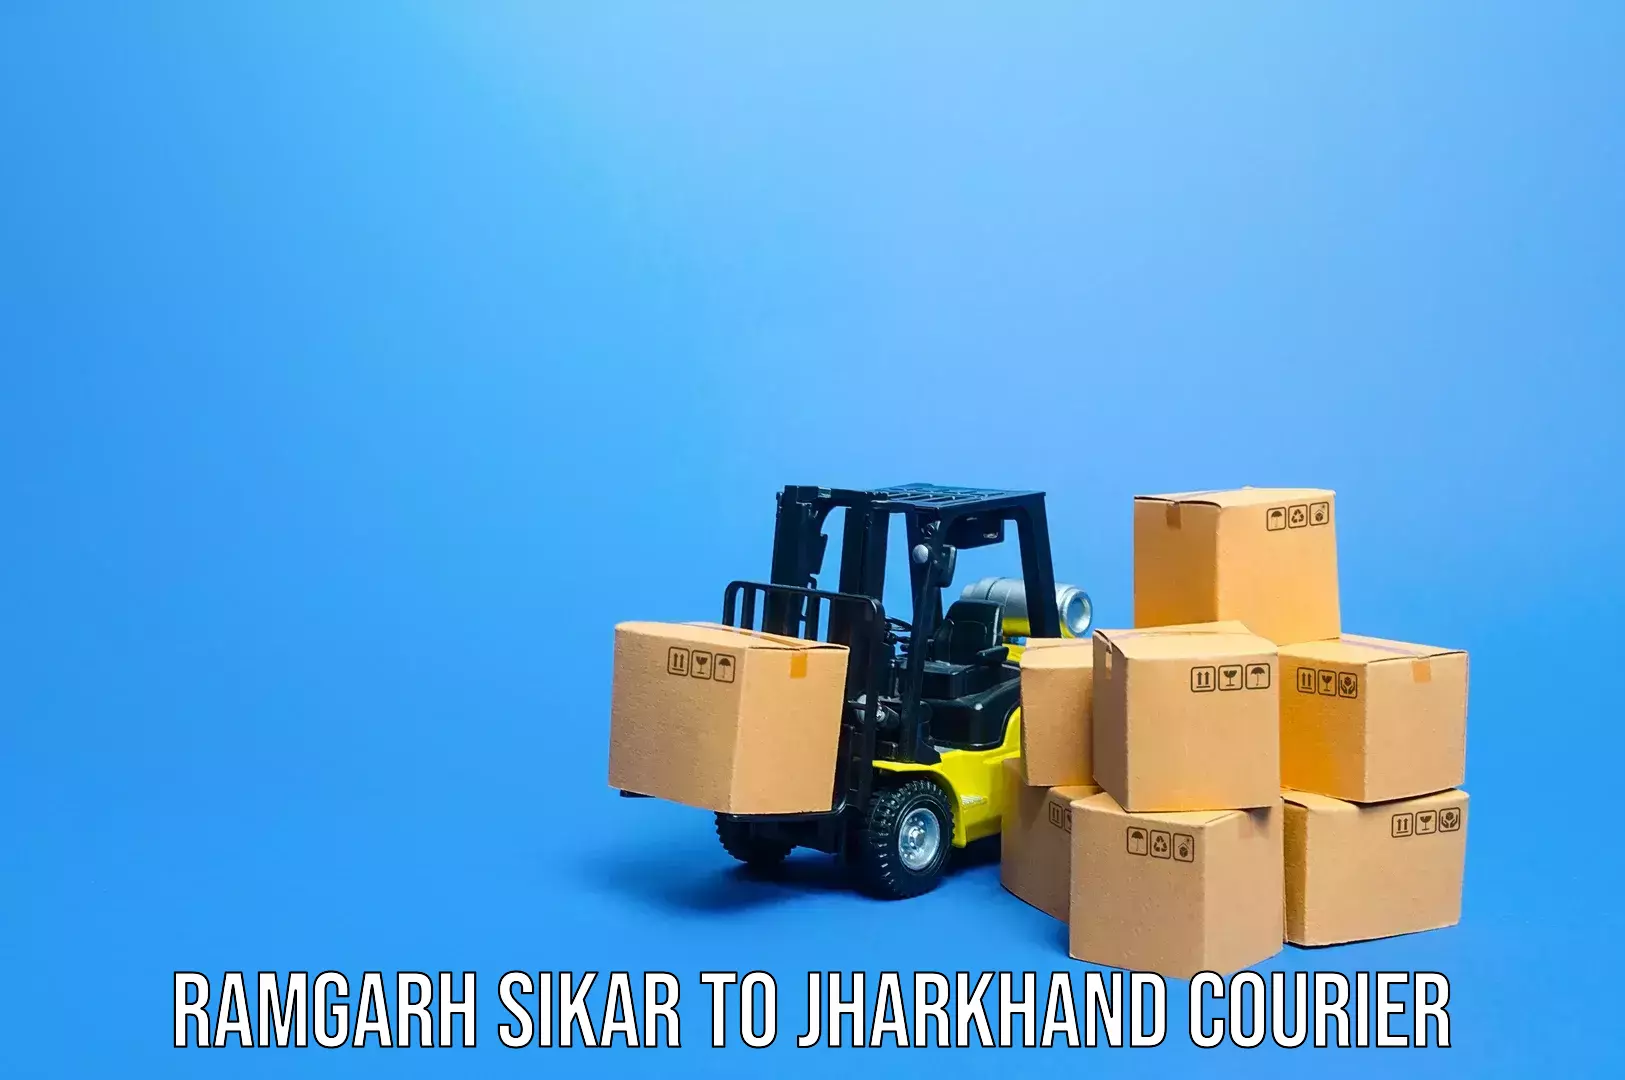 Luggage shipment specialists Ramgarh Sikar to Jharkhand